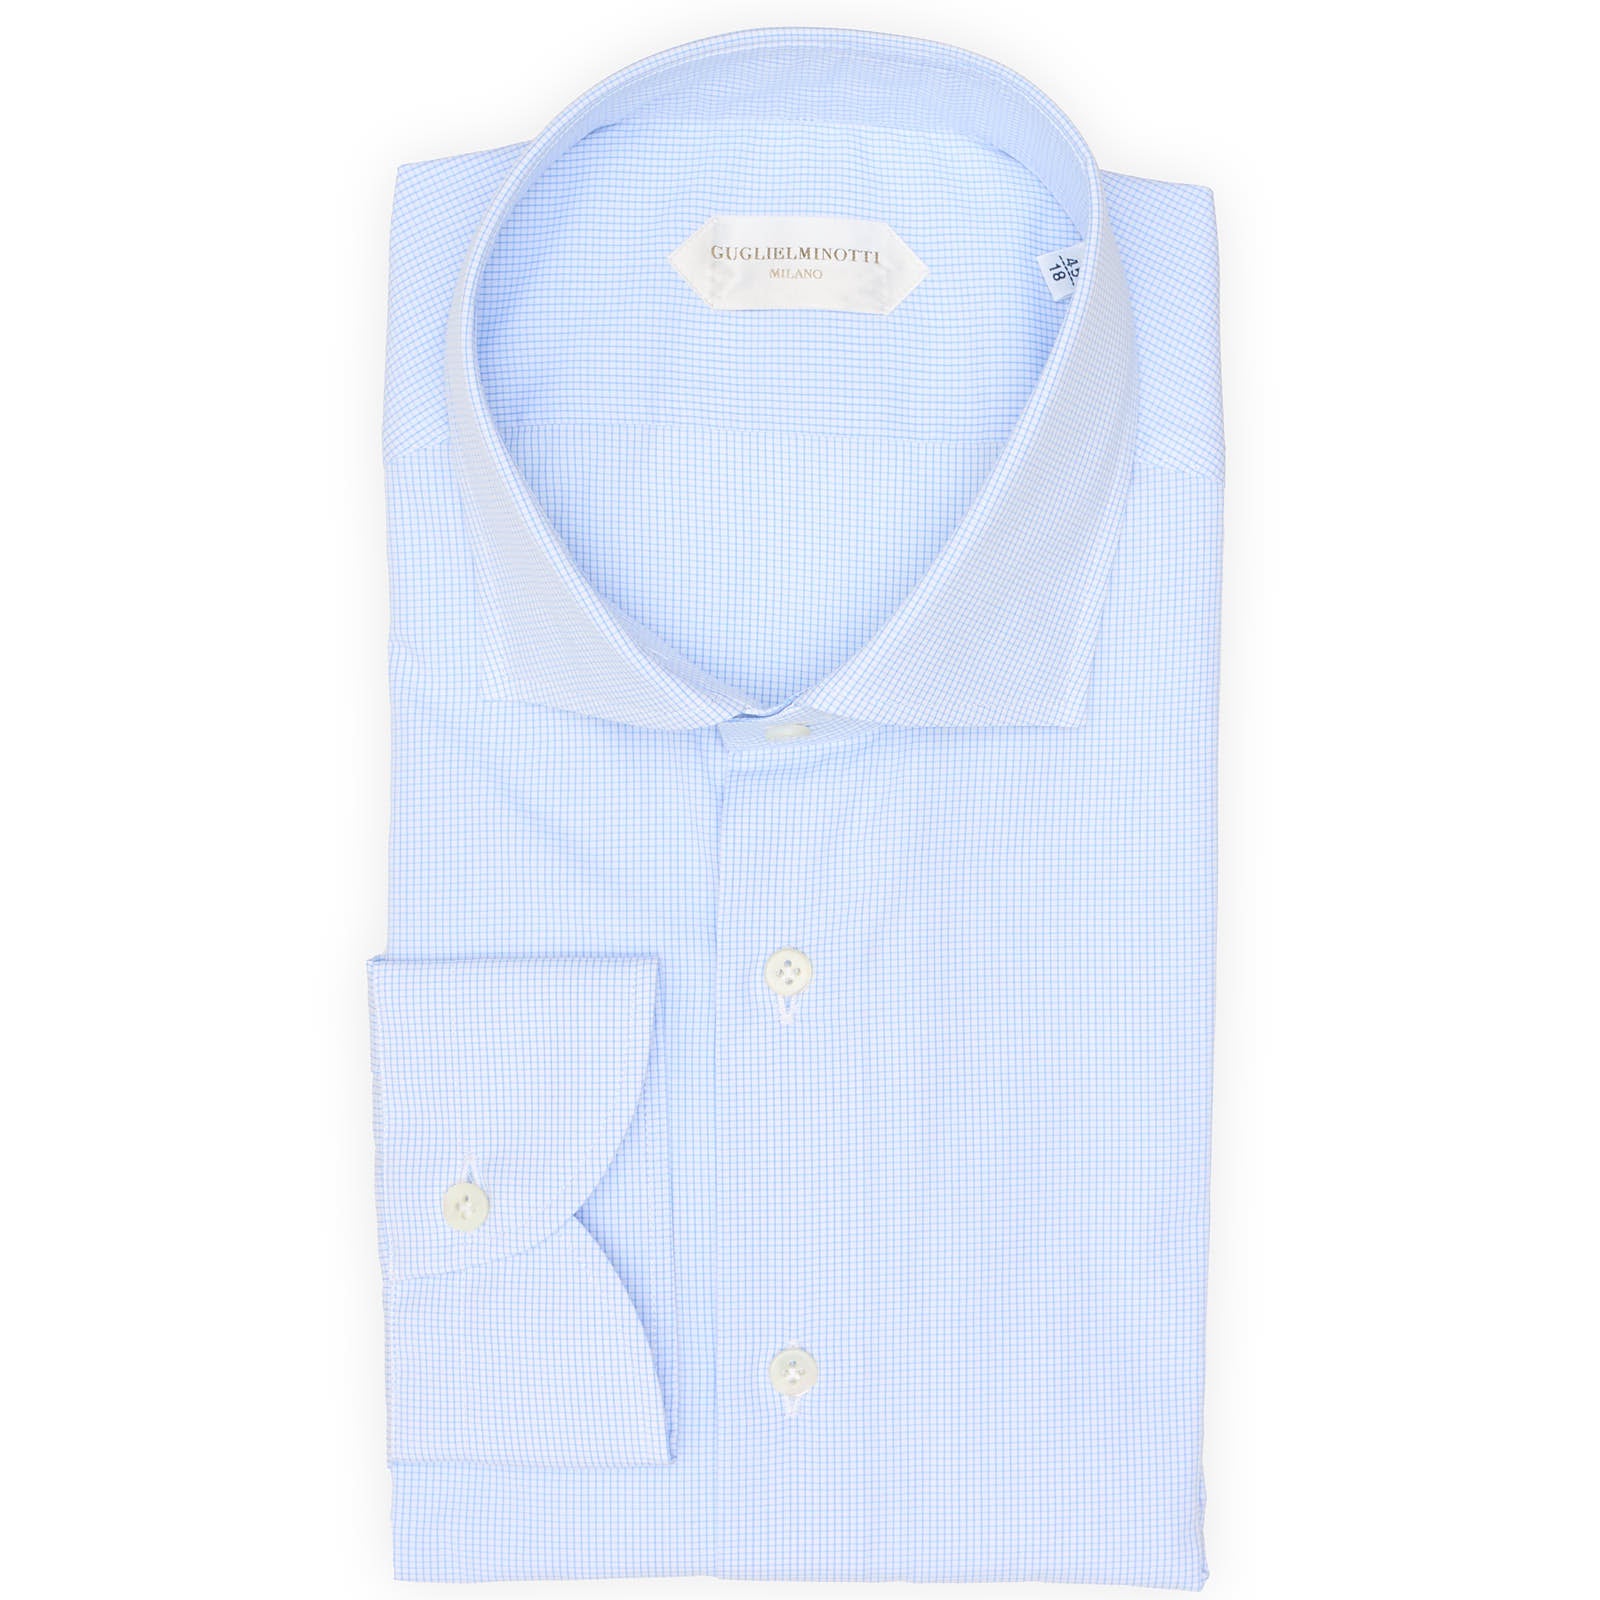 GUGLIELMINOTTI Milano Blue Windowpane Check Cotton Dress Shirt EU 45 NEW US 18